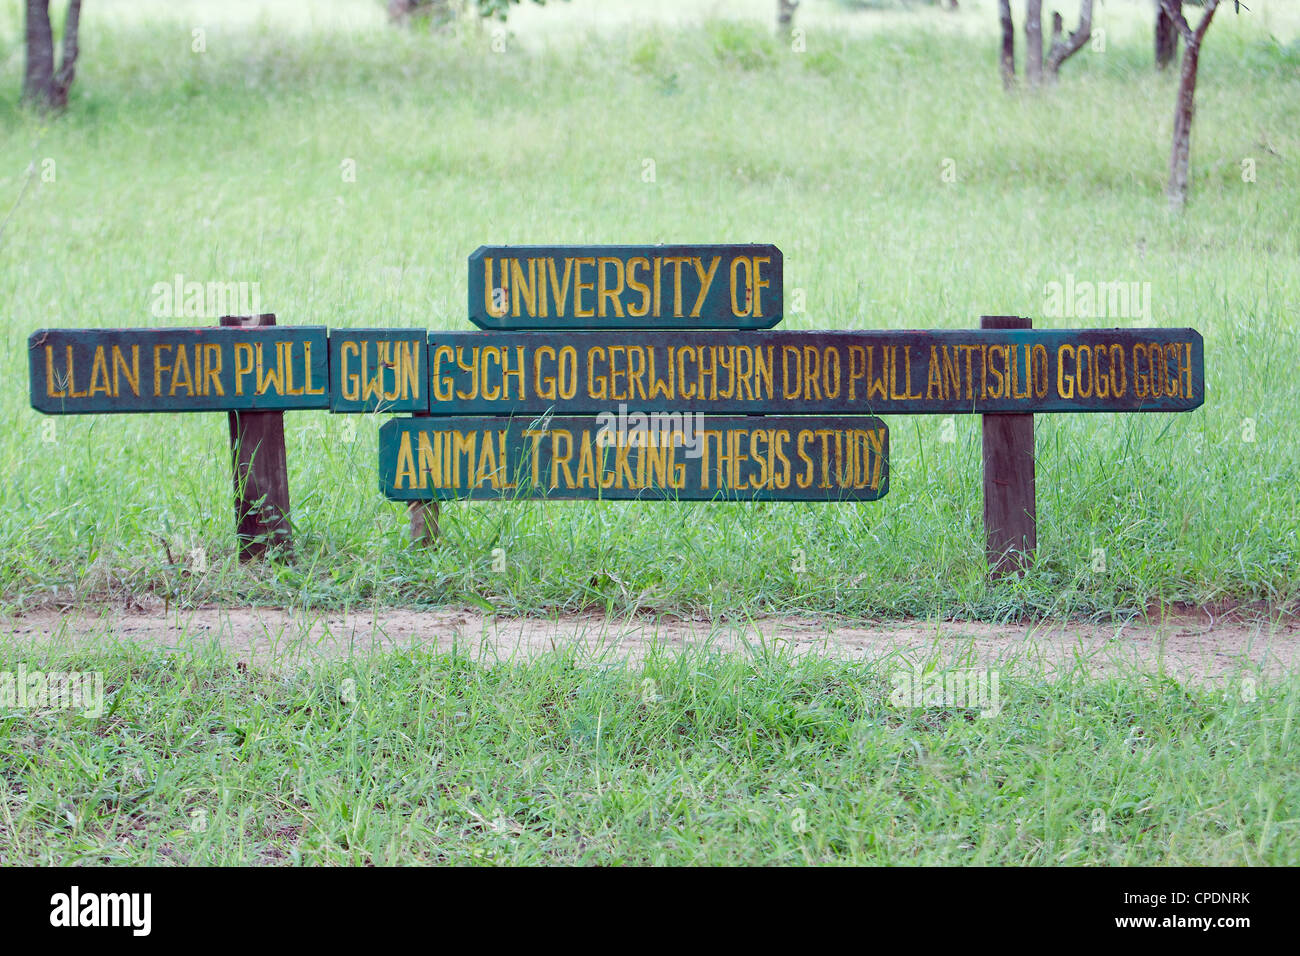 UNIVERSITY OF llanfairpwllgwyngyllgogerychwyrndrobwllllantysiliogogogoch sign Mikumi national park AT RESEARCH .Tanzania Africa. Stock Photo